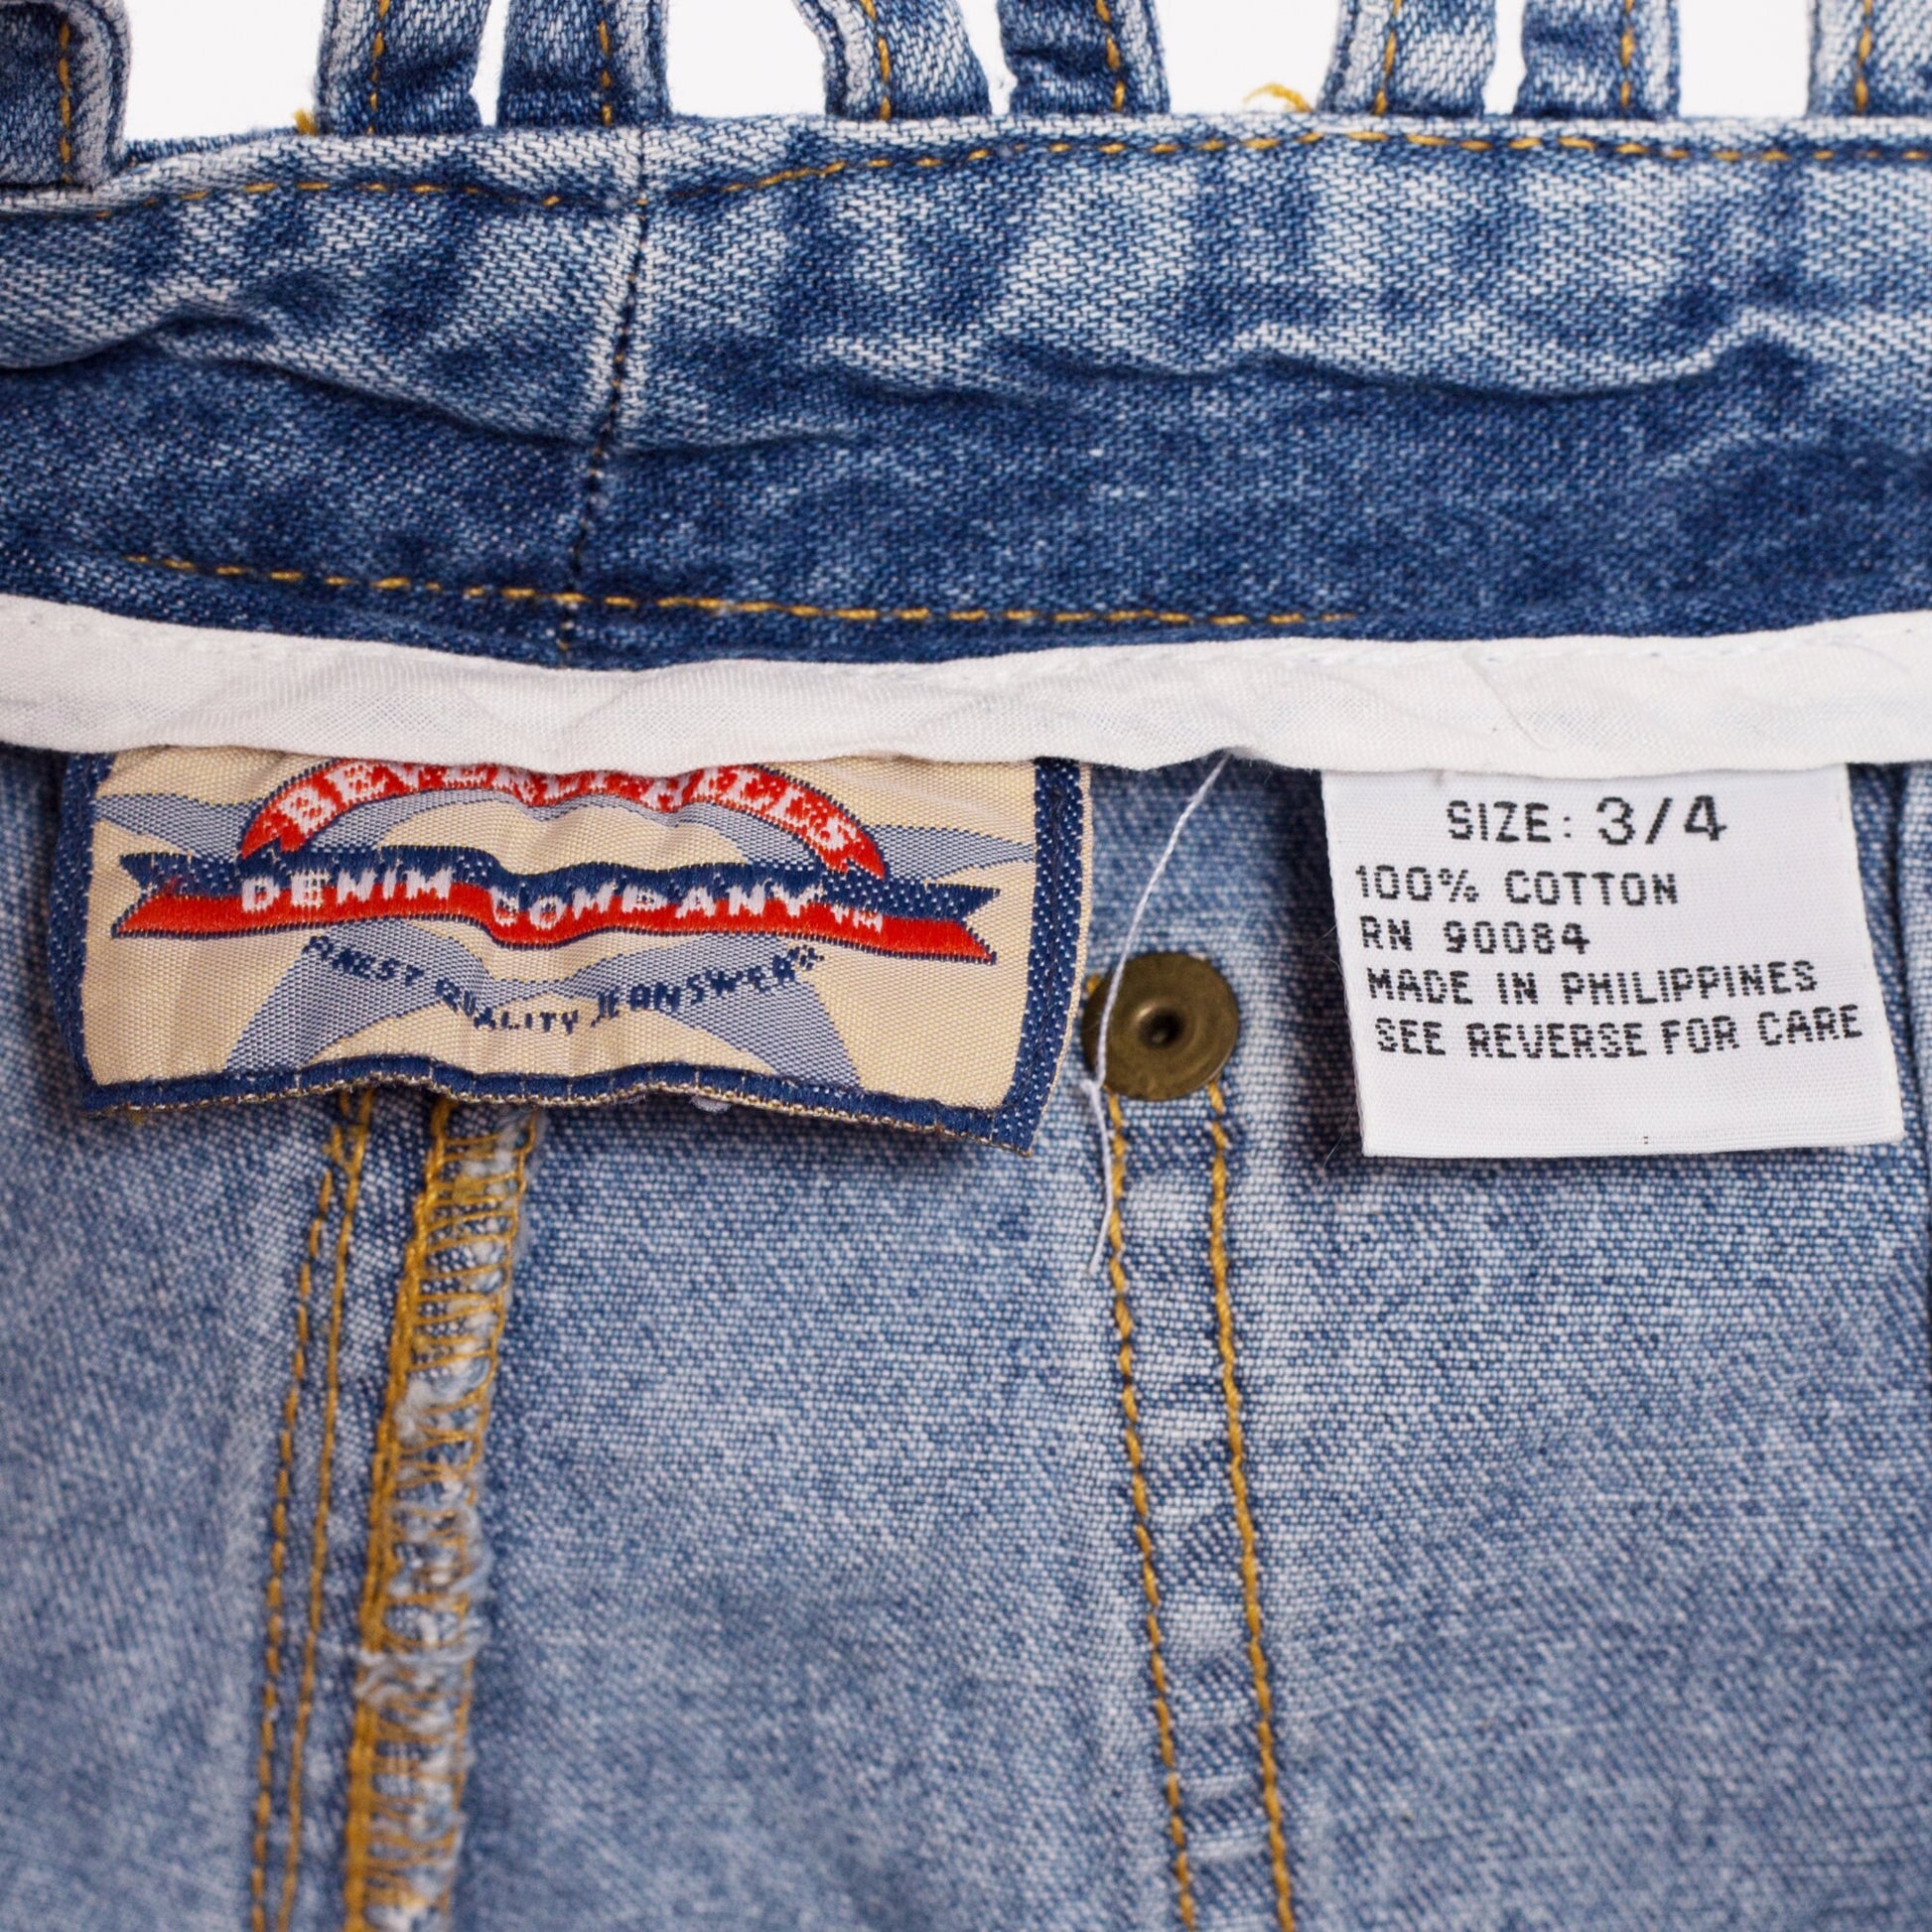 S| 90s Loop Waist Jean Shorts - Small | Vintage Light Wash Mid Rise Denim Shorts